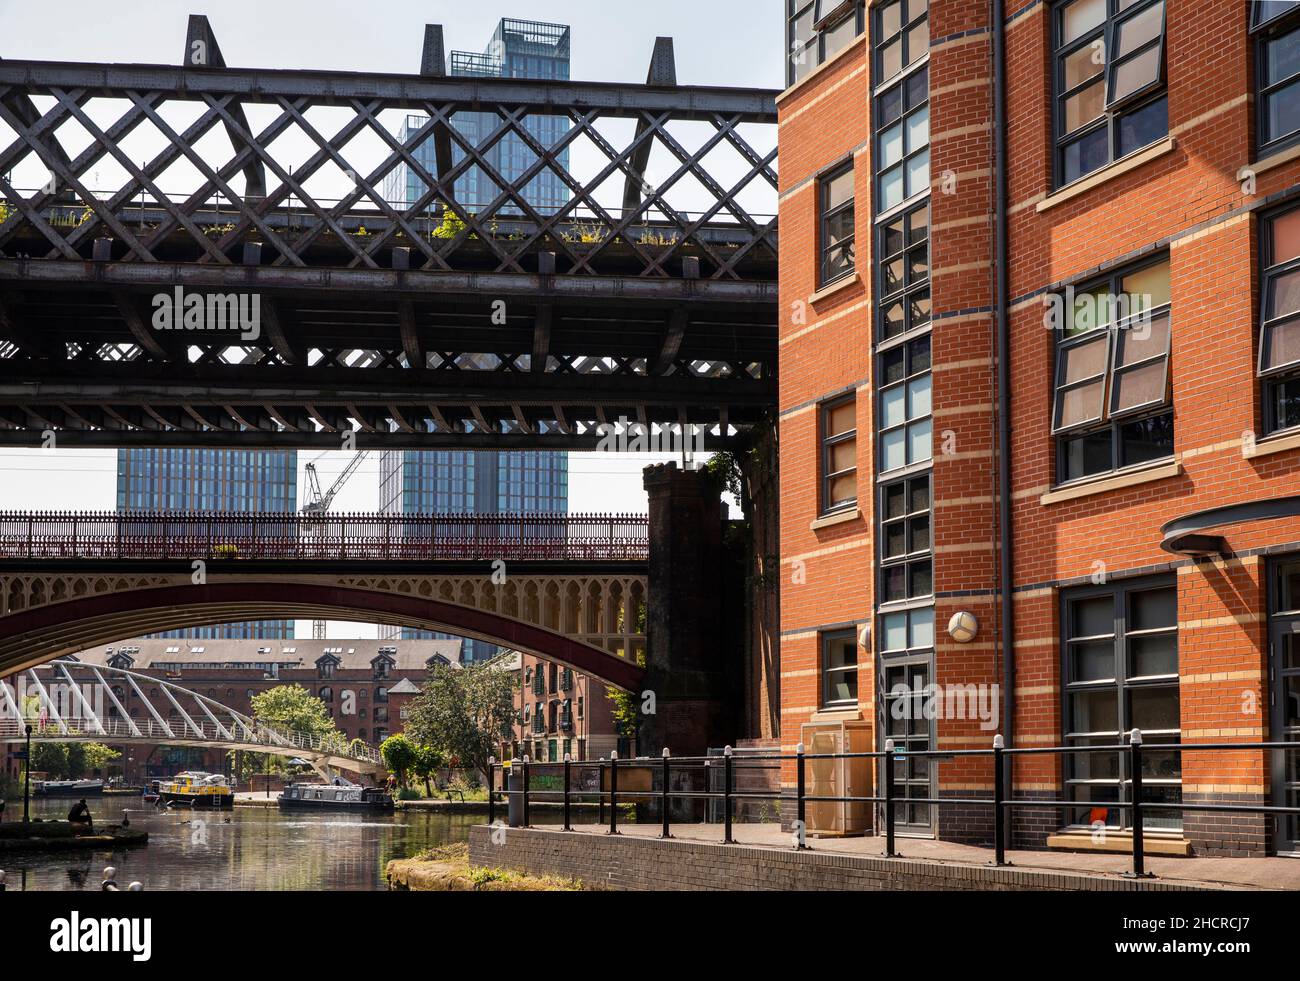 UK, England, Manchester, Castlefield, redundant railway viaduct and Merchant’s Bridge crossing Bridgewater Canal basin Stock Photo